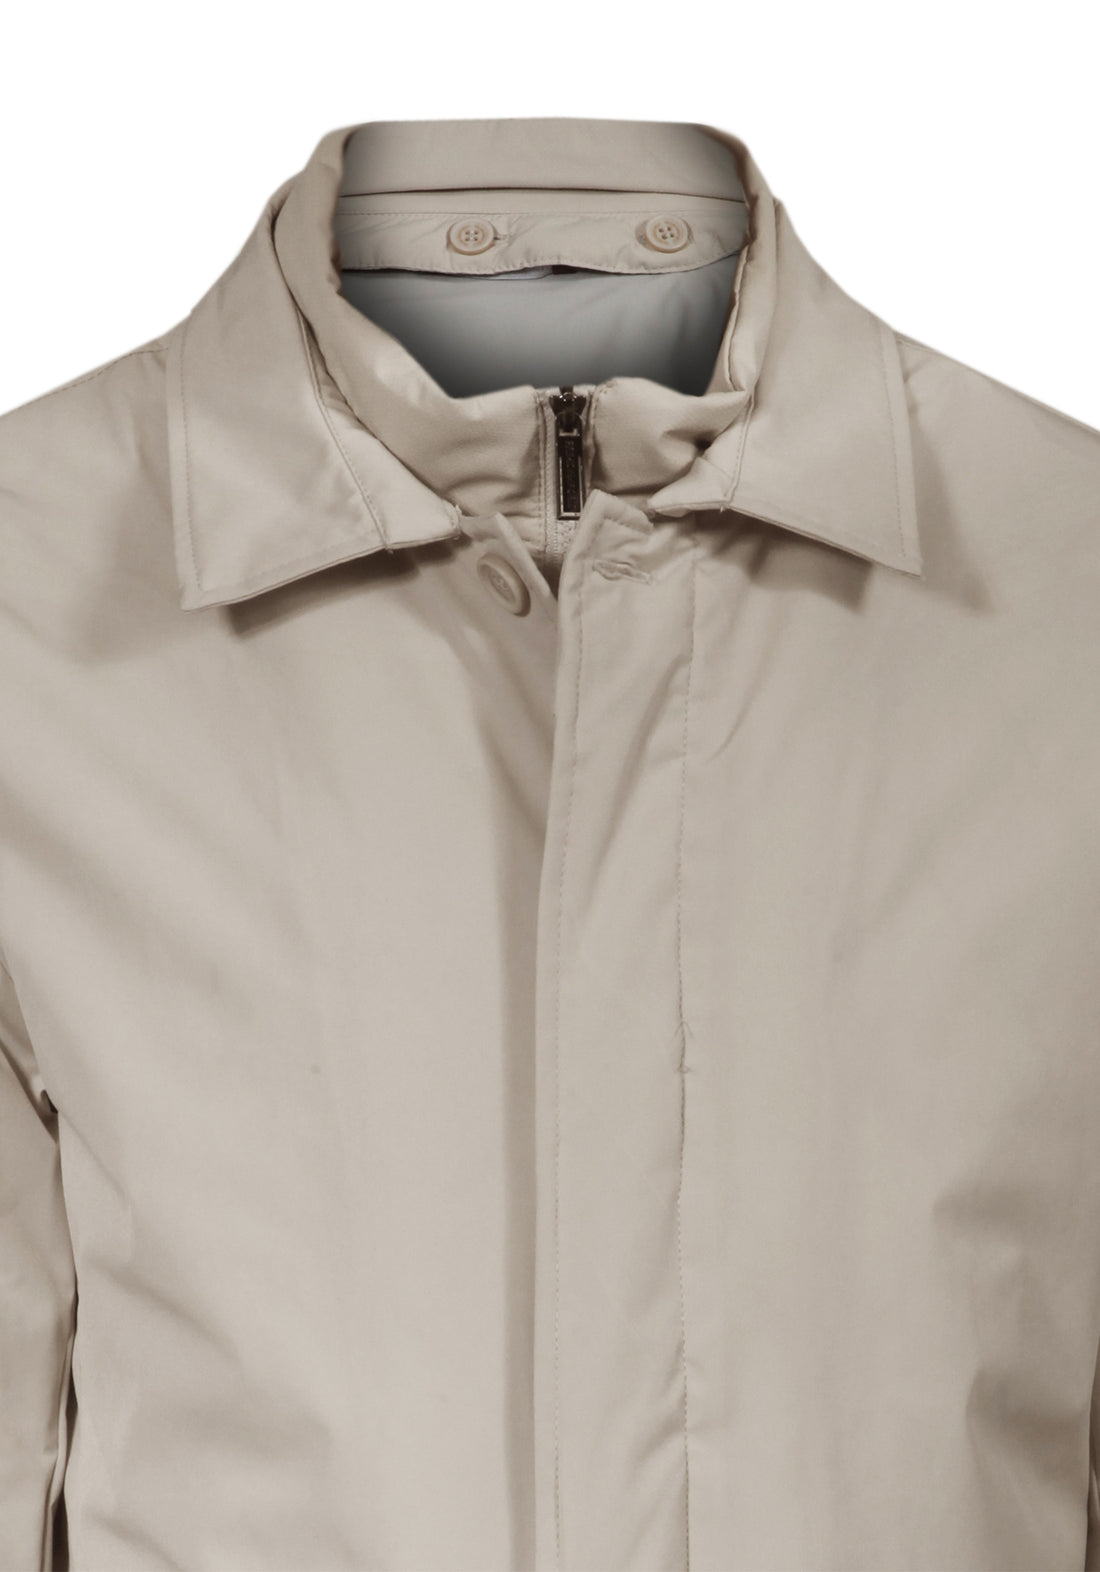 Trench Collar Shirt Removable internal bib - Beige